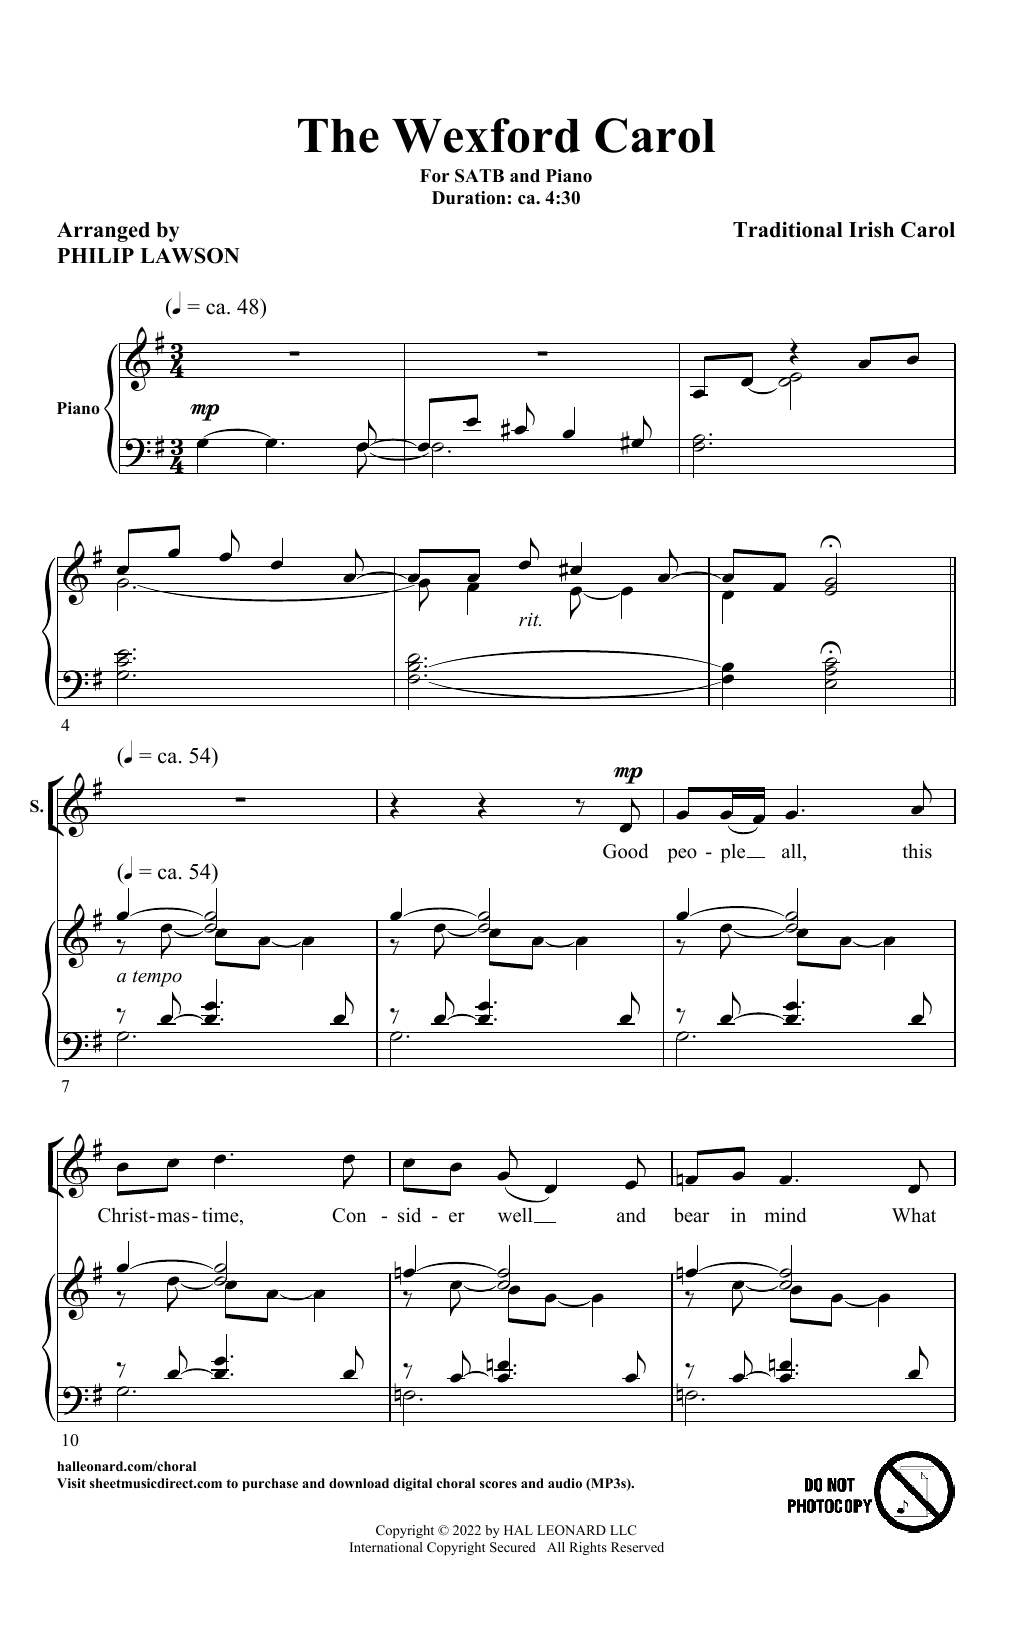 Traditional Irish Carol The Wexford Carol (arr. Philip Lawson) Sheet Music Notes & Chords for SATB Choir - Download or Print PDF